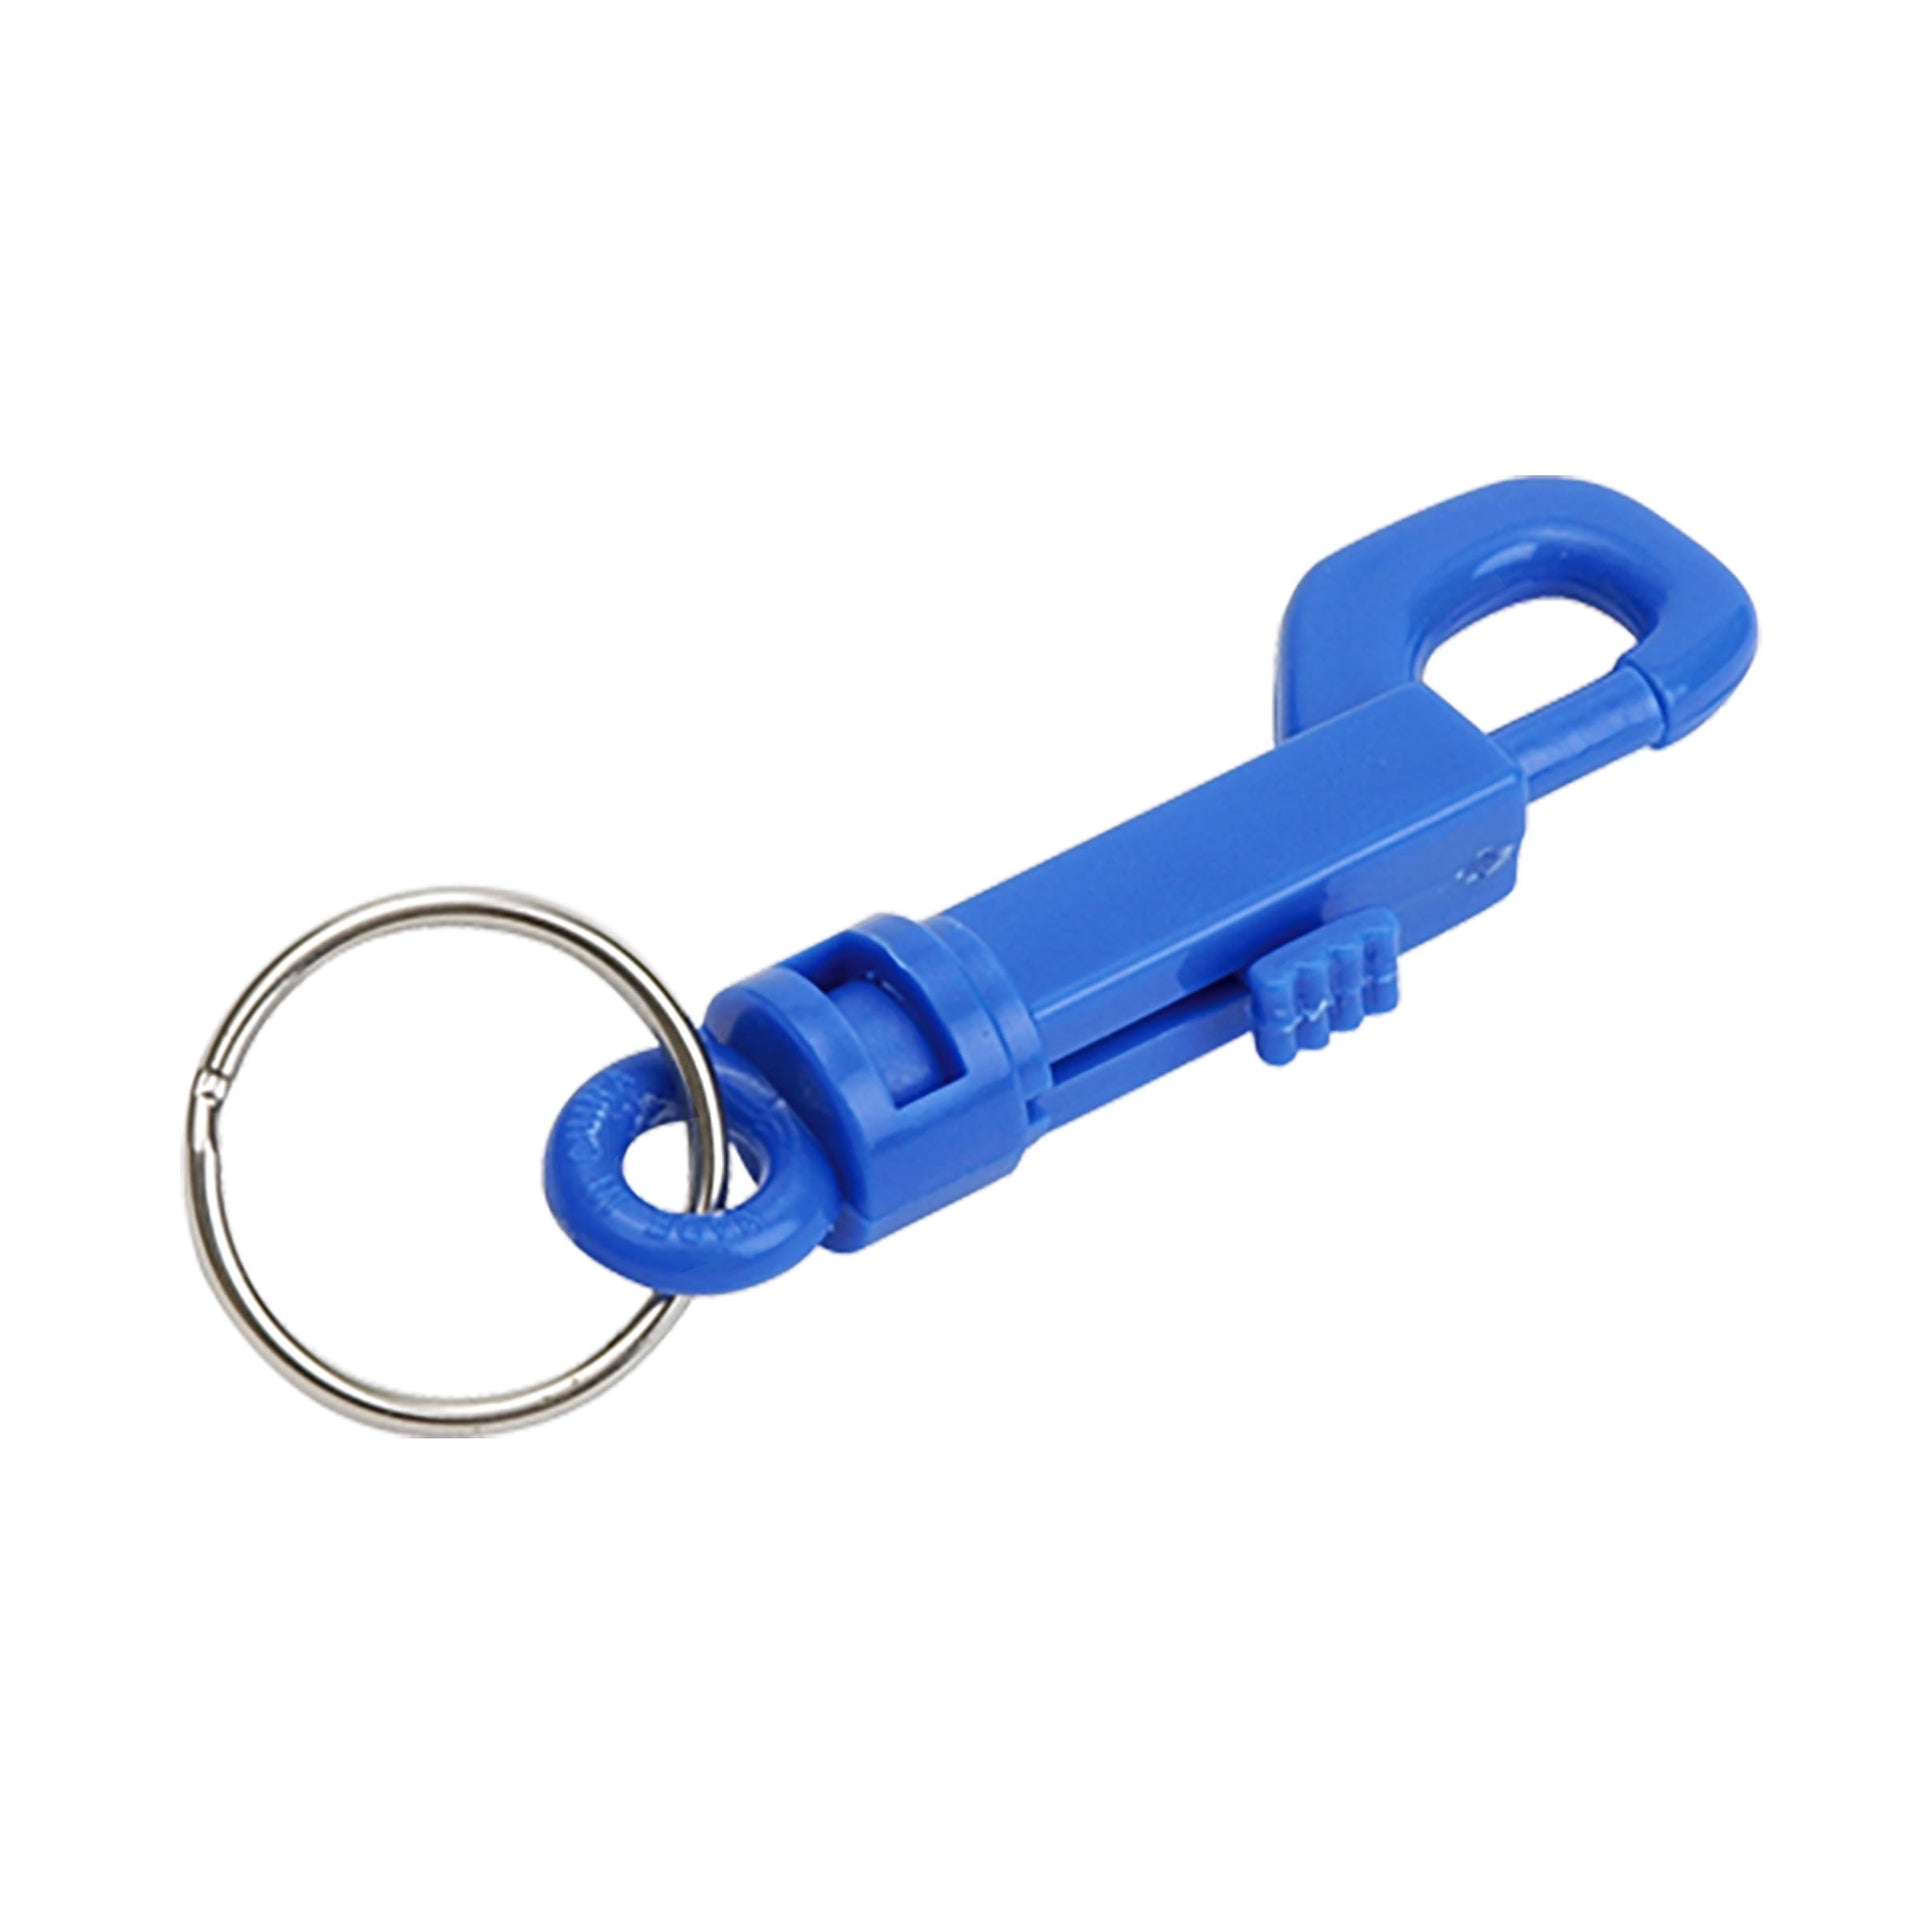 Lita P6 keychain with plastic clip - CMYMK